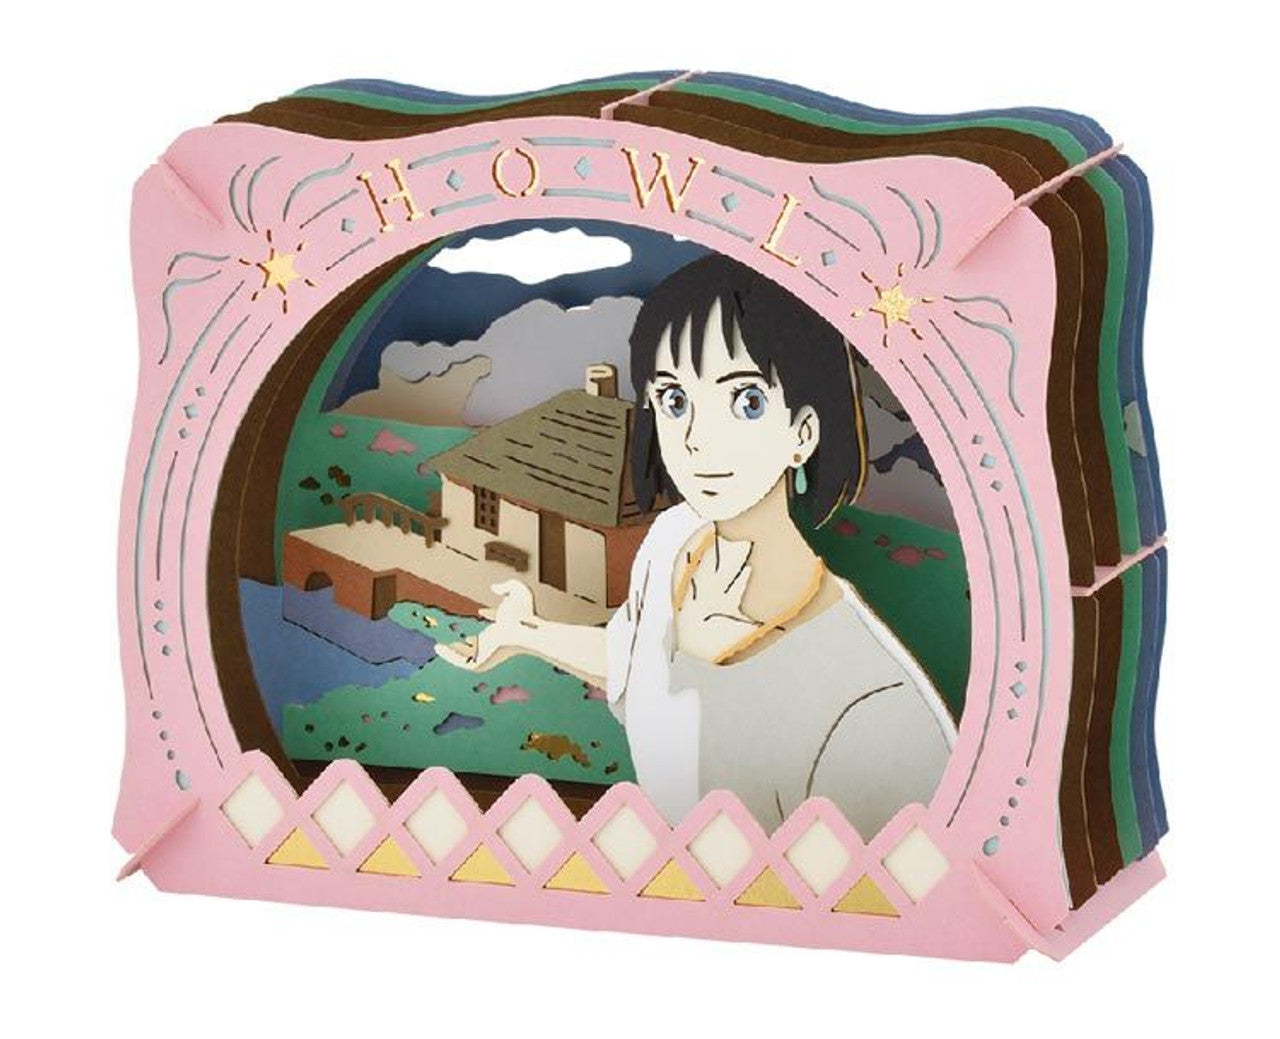 Ensky - Ghibli Howl's Moving Castle Paper Theater Cube PTC-T07